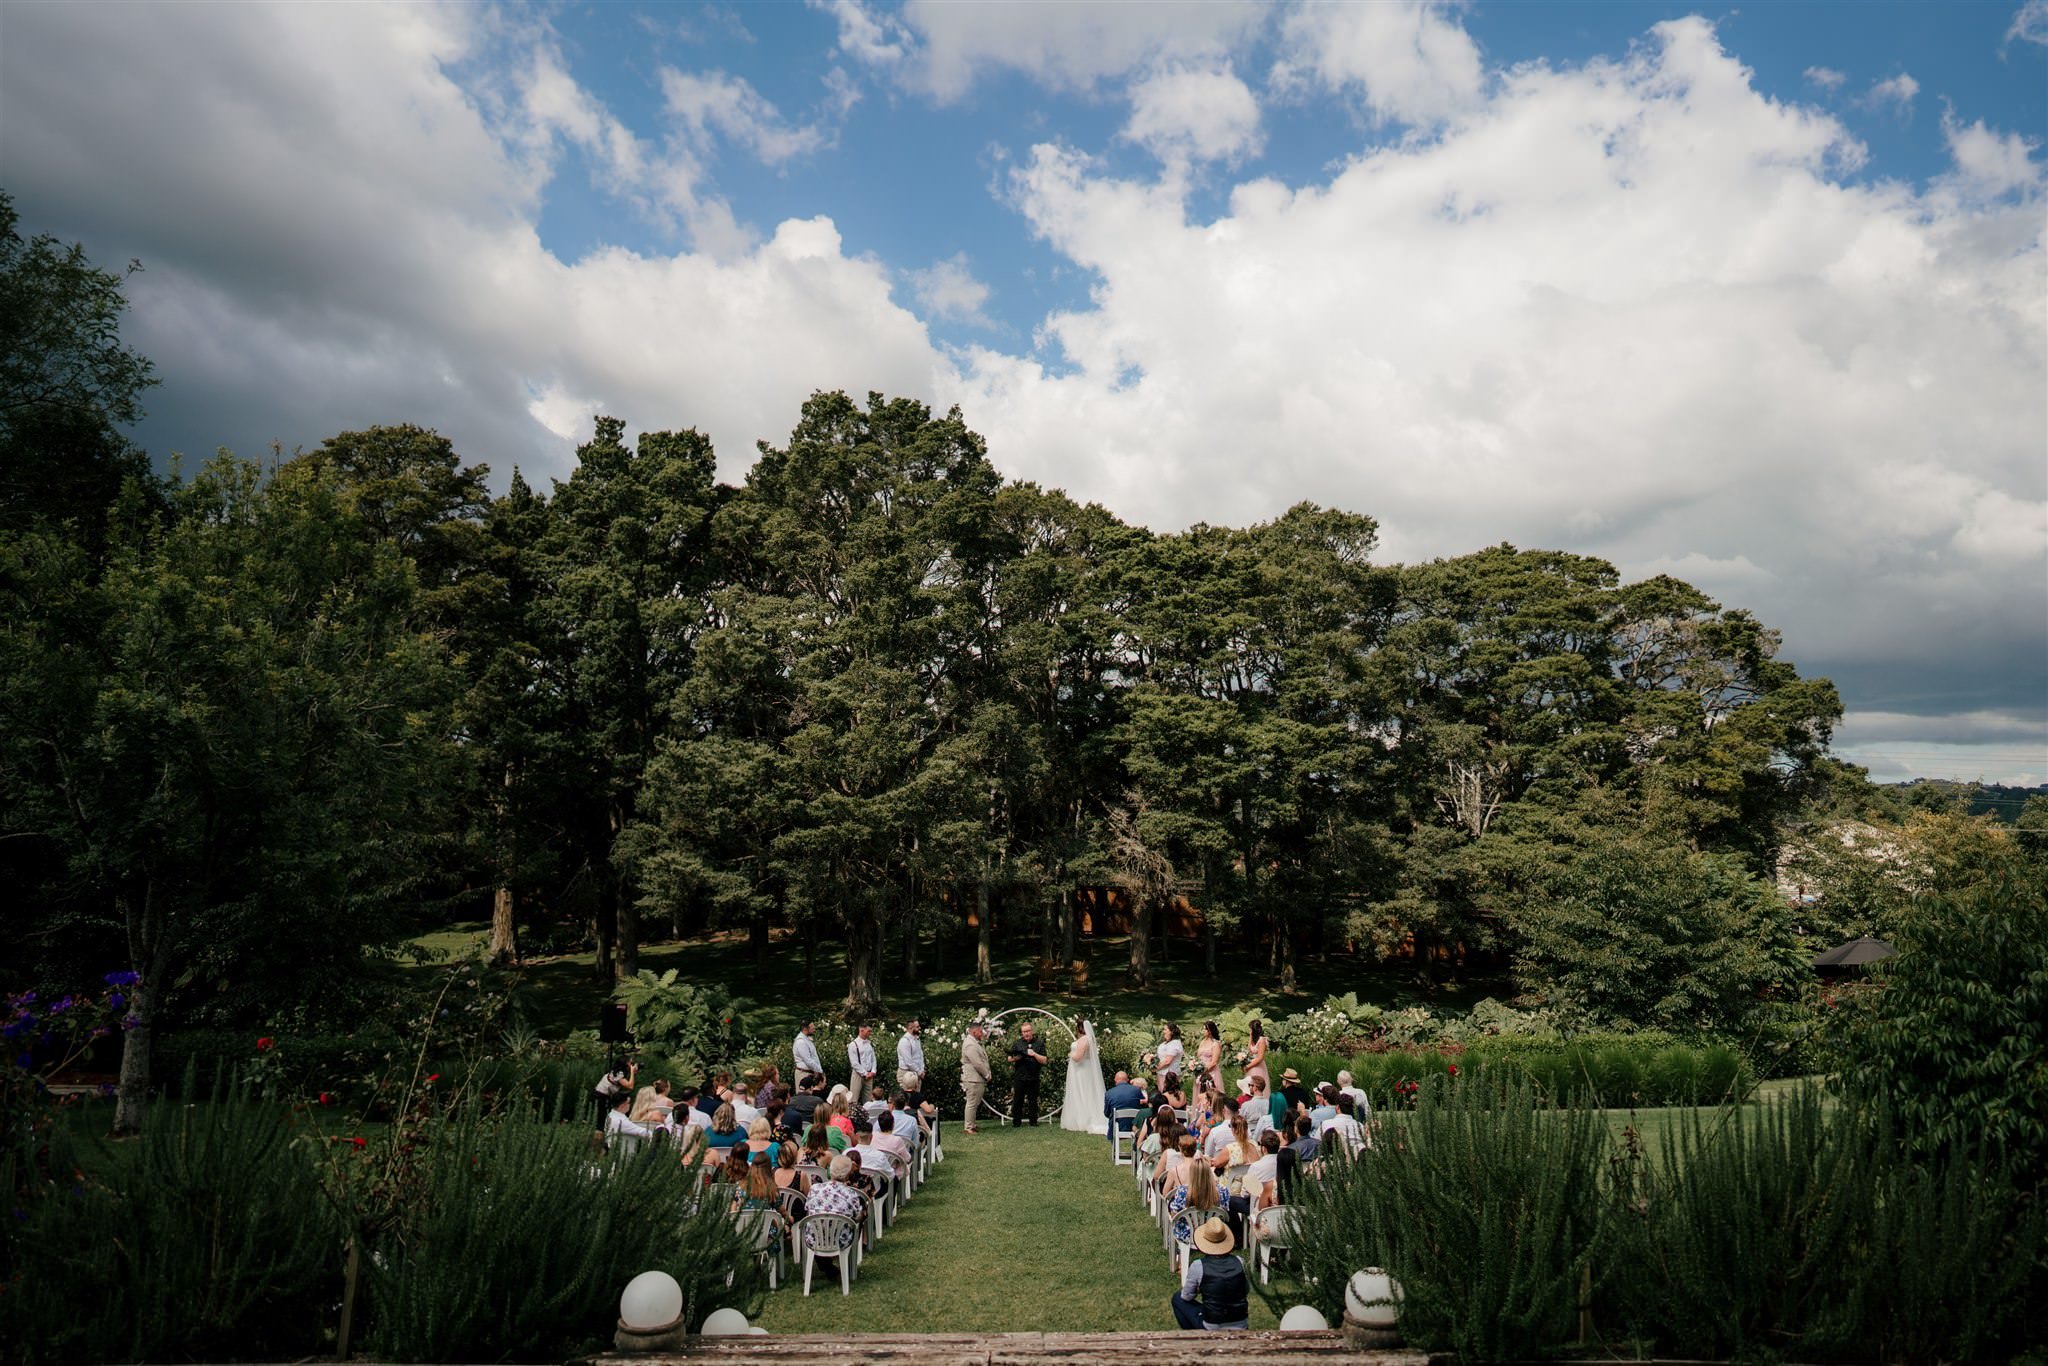 Winsford-Gardens-best-south-auckland-wedding-venue-dear-white-productions-photographer-videography-elegant-new-zealand (44).jpg